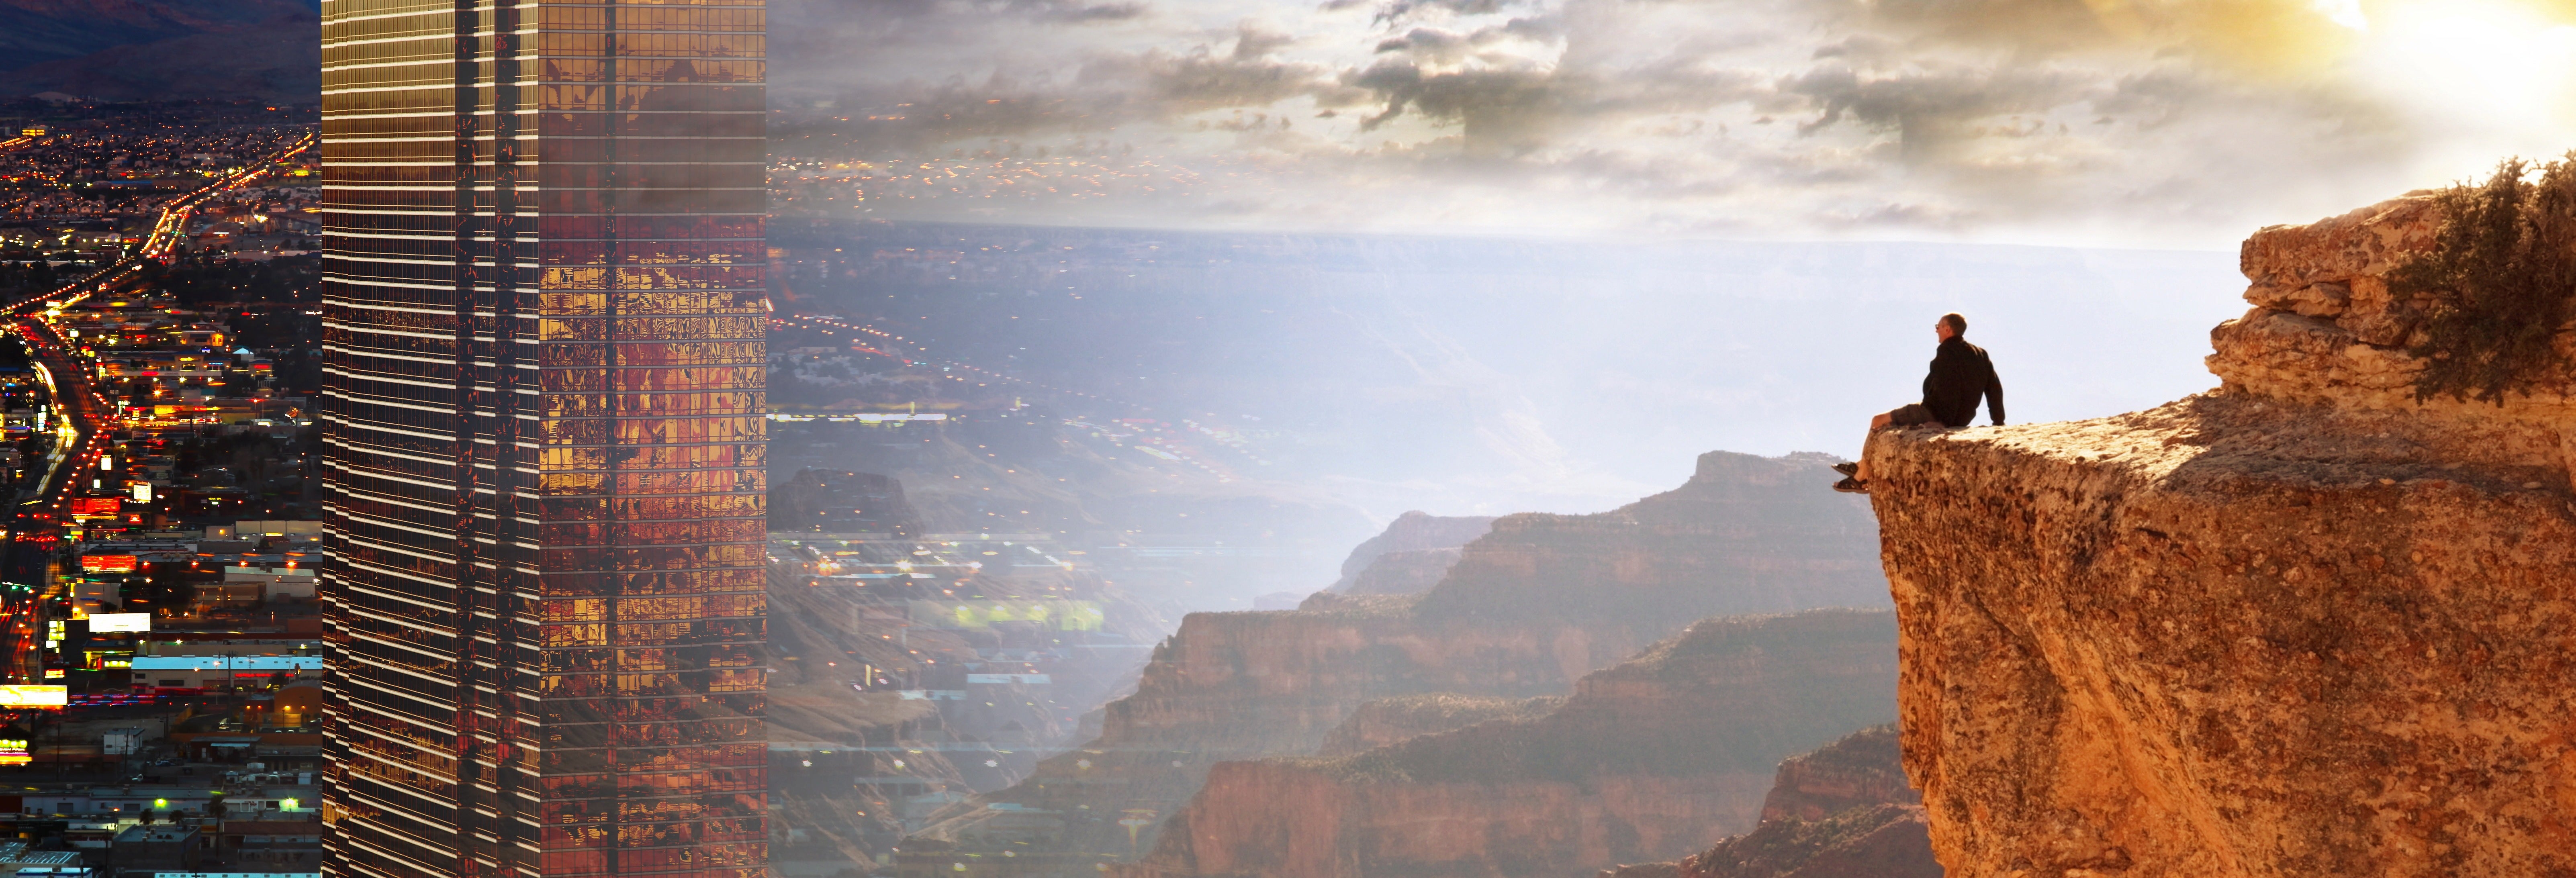 Oferta: Grand Canyon + Tour por Las Vegas